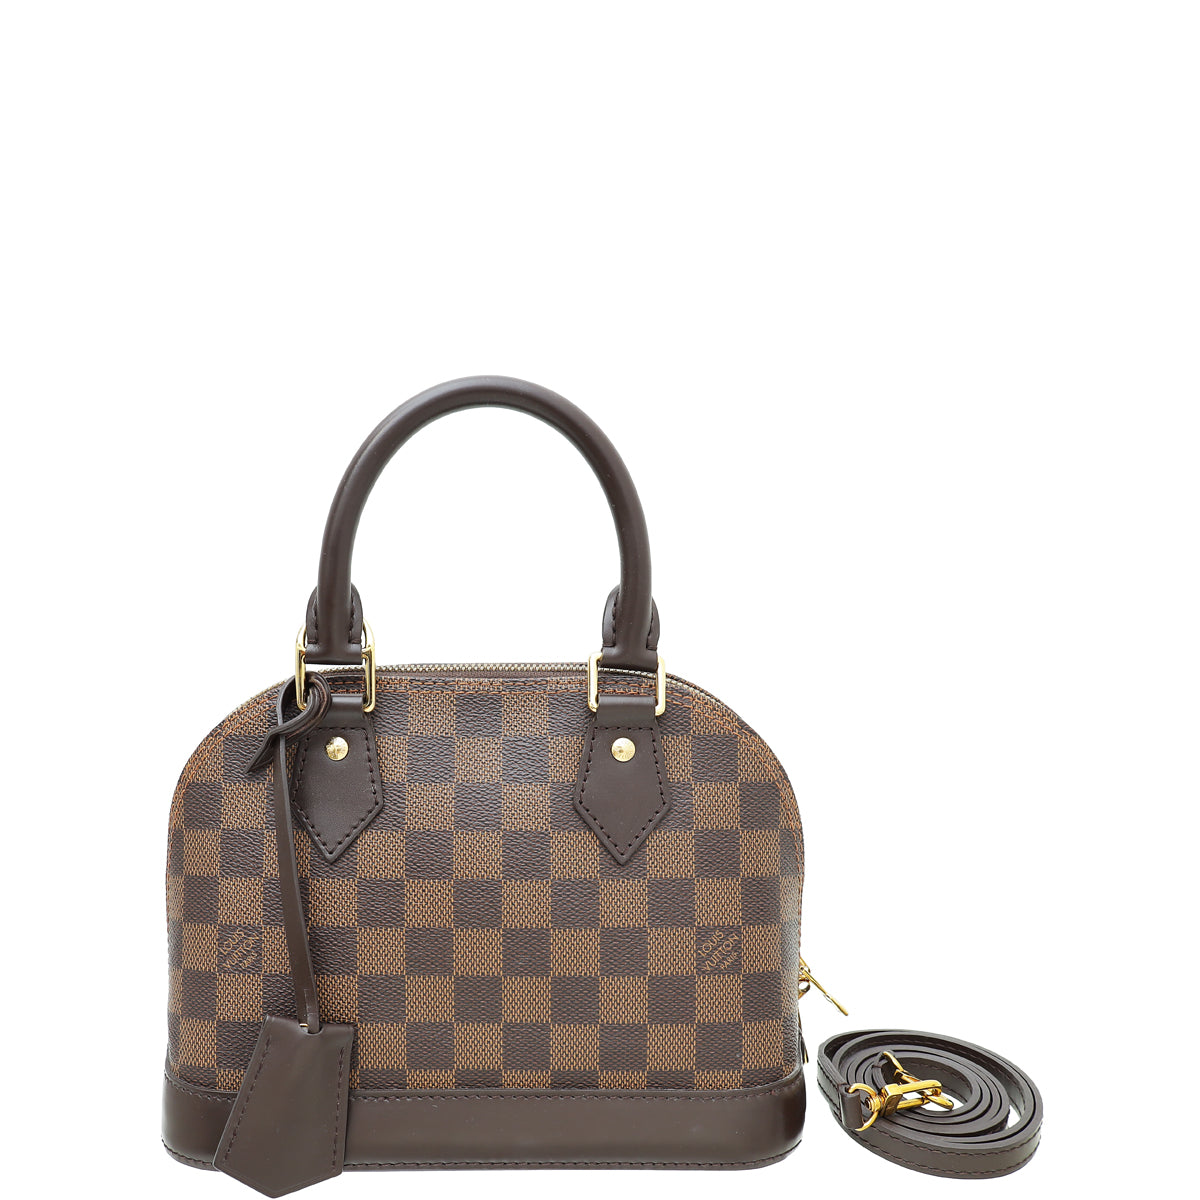 Louis Vuitton 18K Crystal Alma Bag Charm